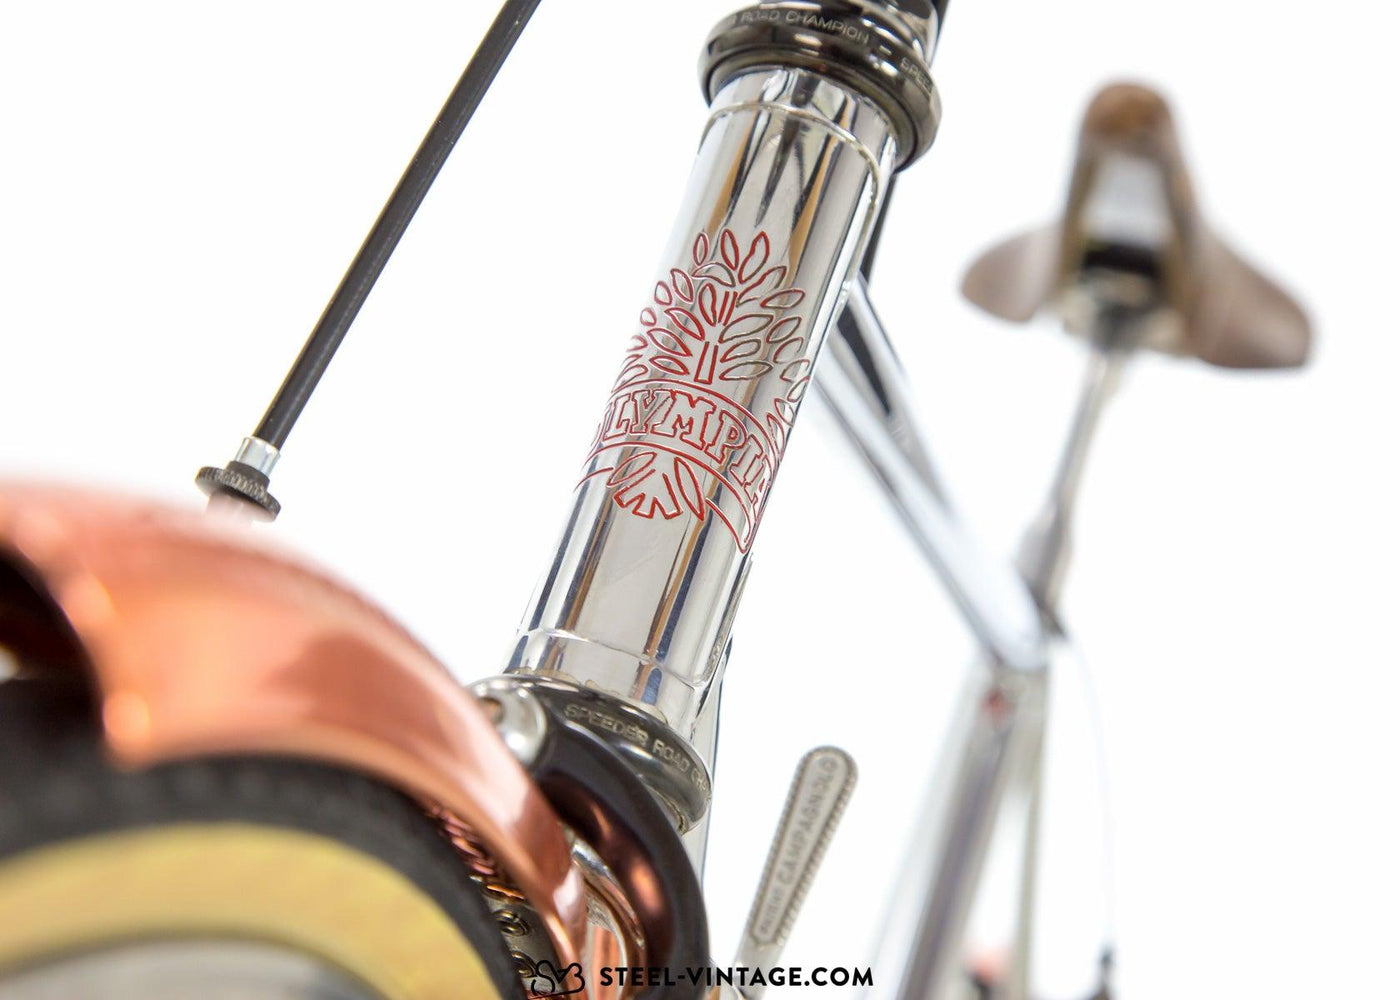 Olympia Chromed Randonneur Bike - Steel Vintage Bikes